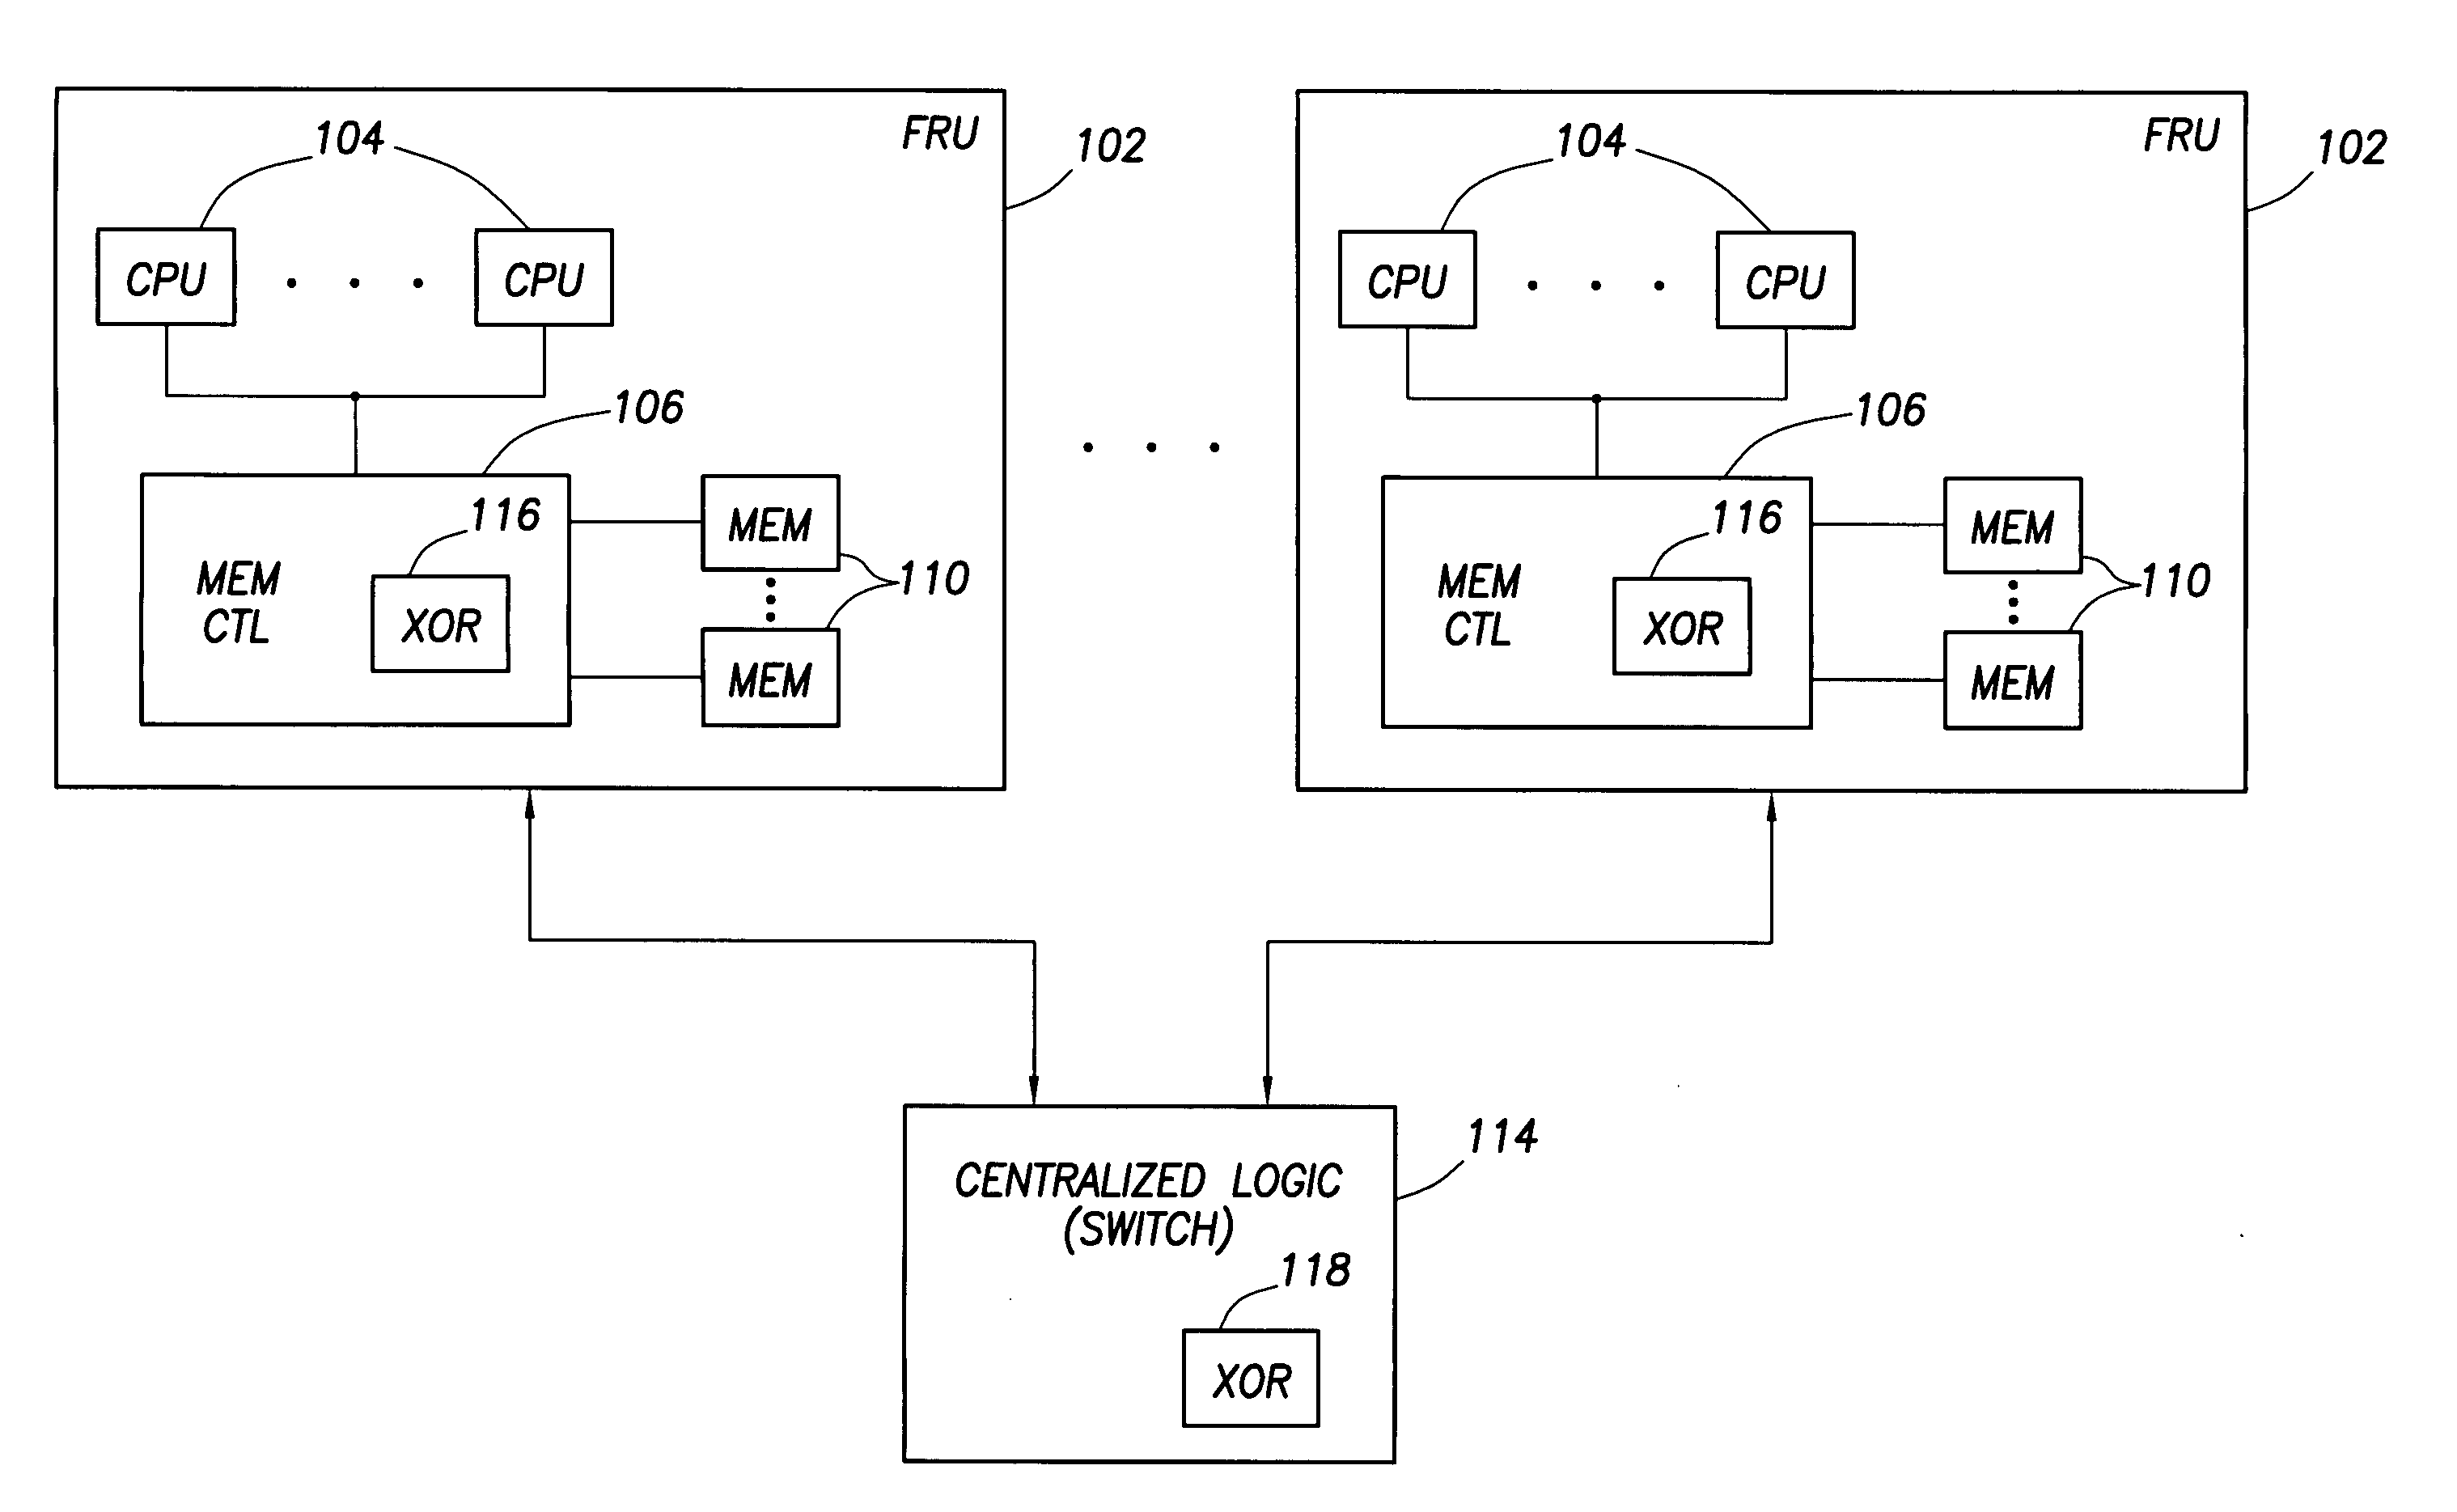 Data redundancy in a hot pluggable, large symmetric multi-processor system